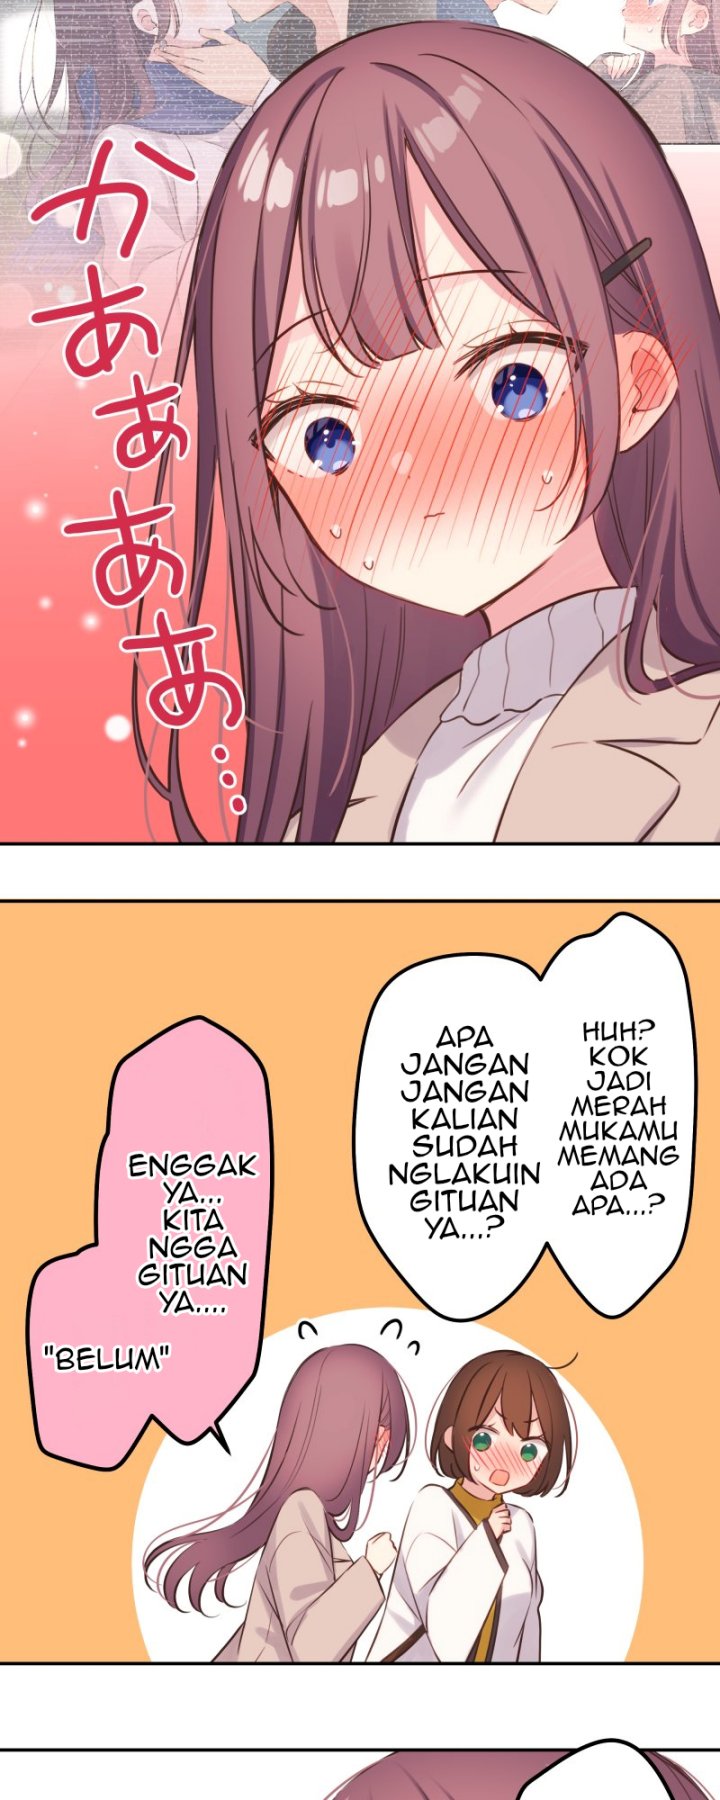 Waka-chan Is Flirty Again Chapter 125